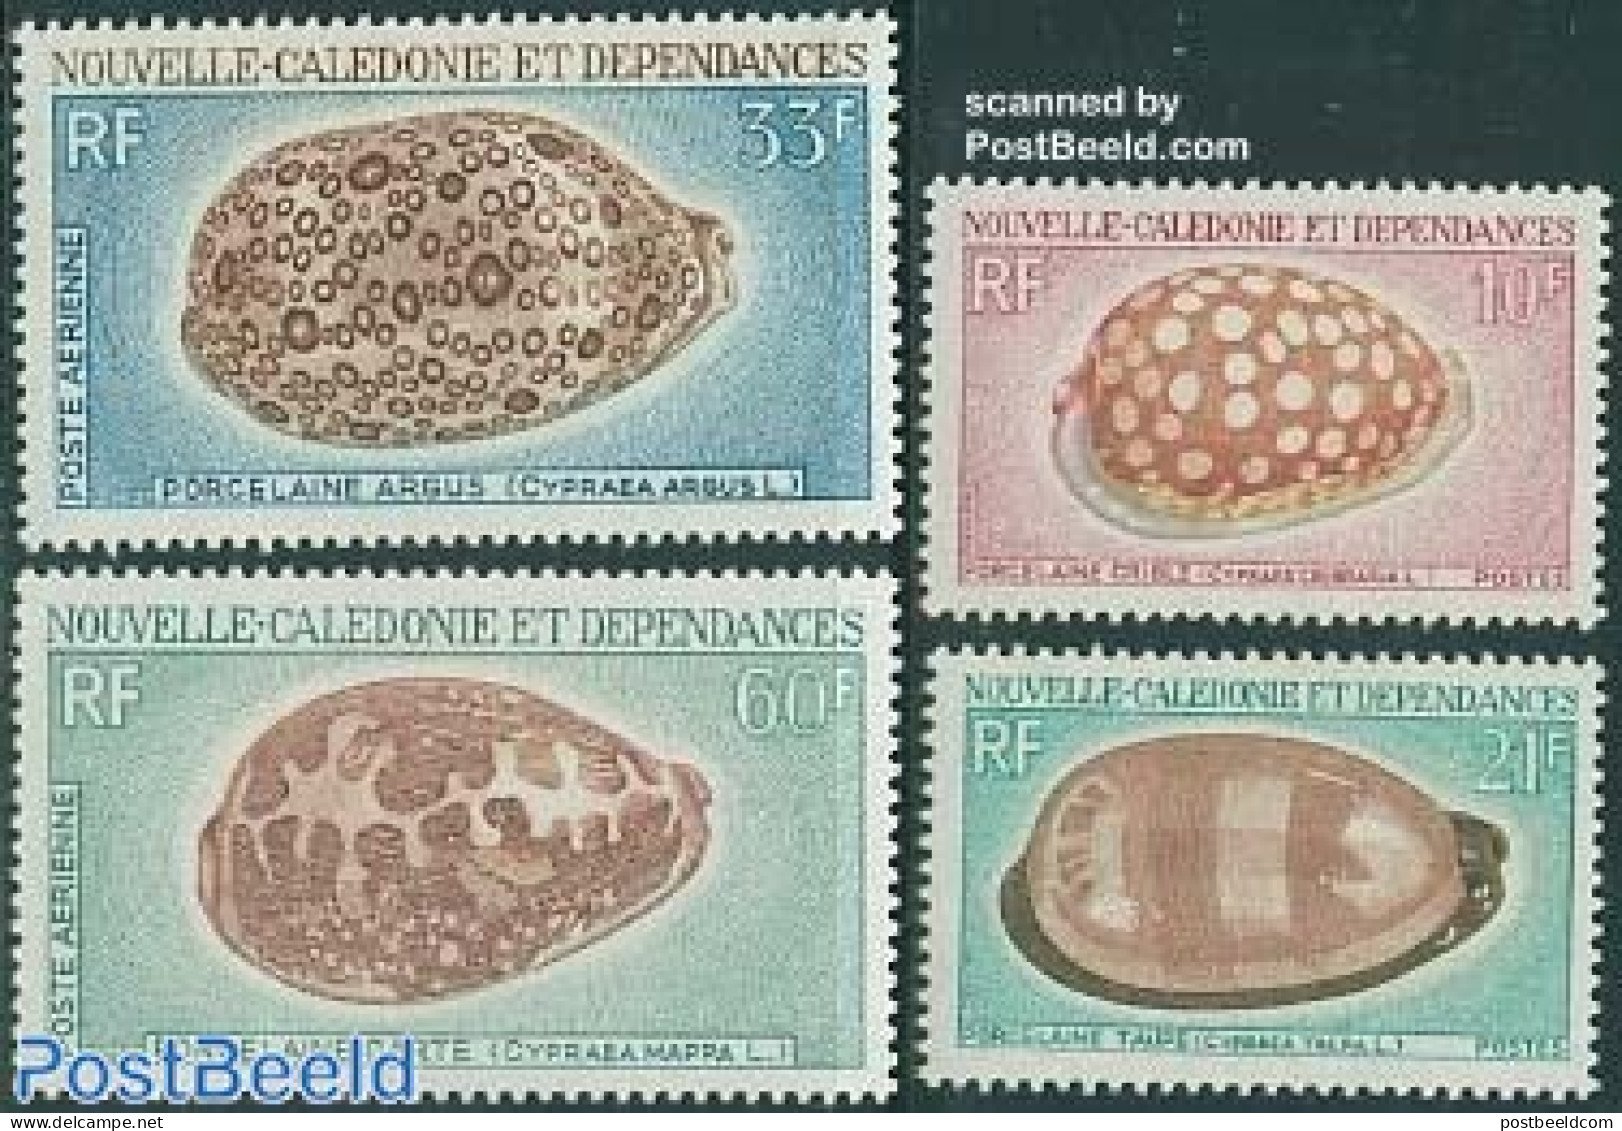 New Caledonia 1970 Shells 4v, Mint NH, Nature - Shells & Crustaceans - Nuovi